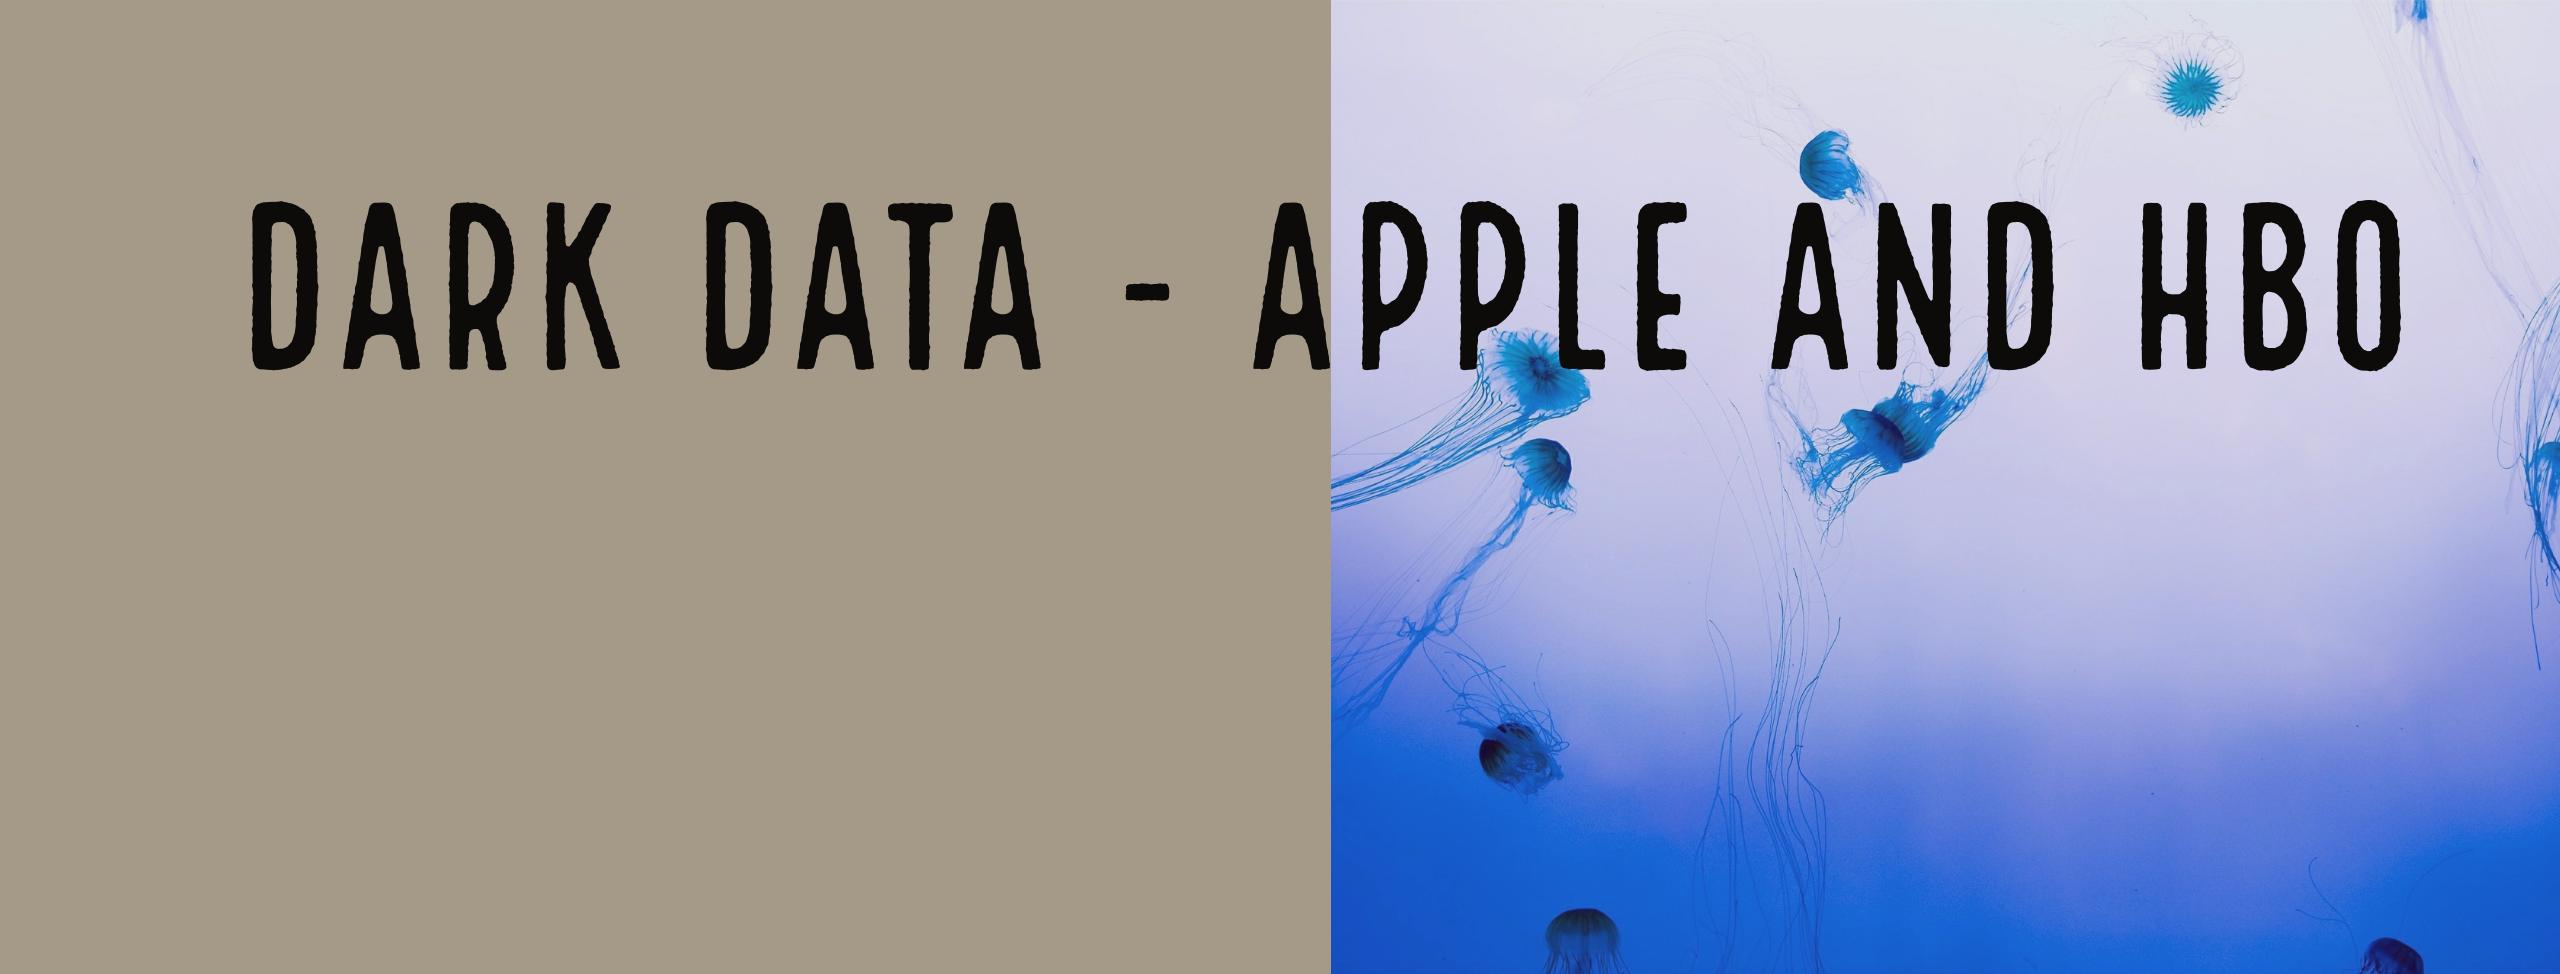 Dark Data, Apple and HBO